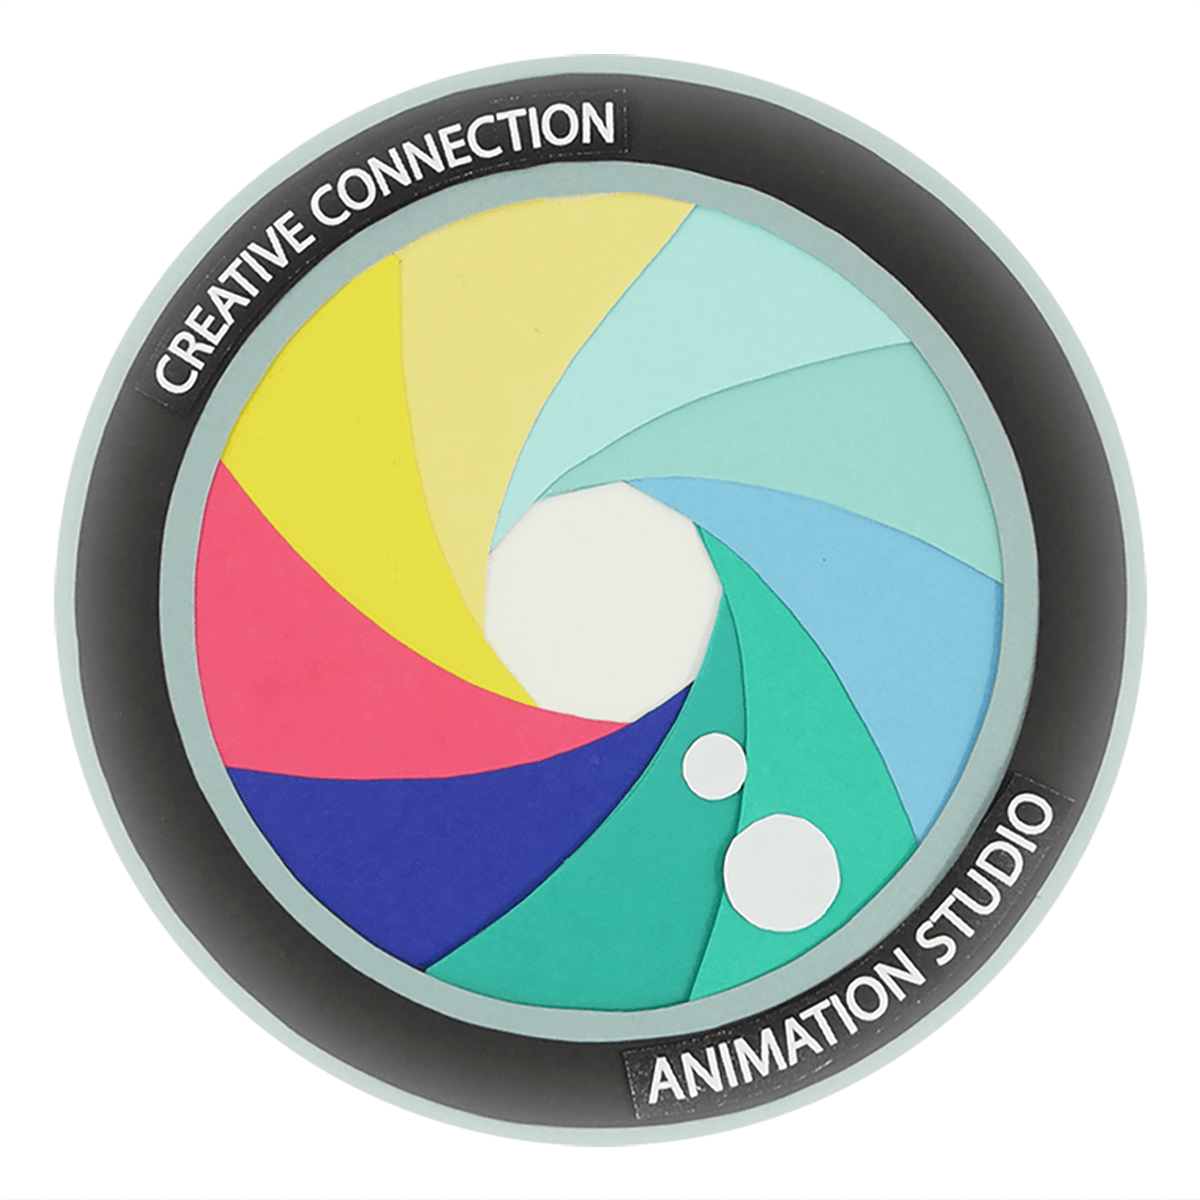 Creative-Connection-Animation-Studio-logo-square